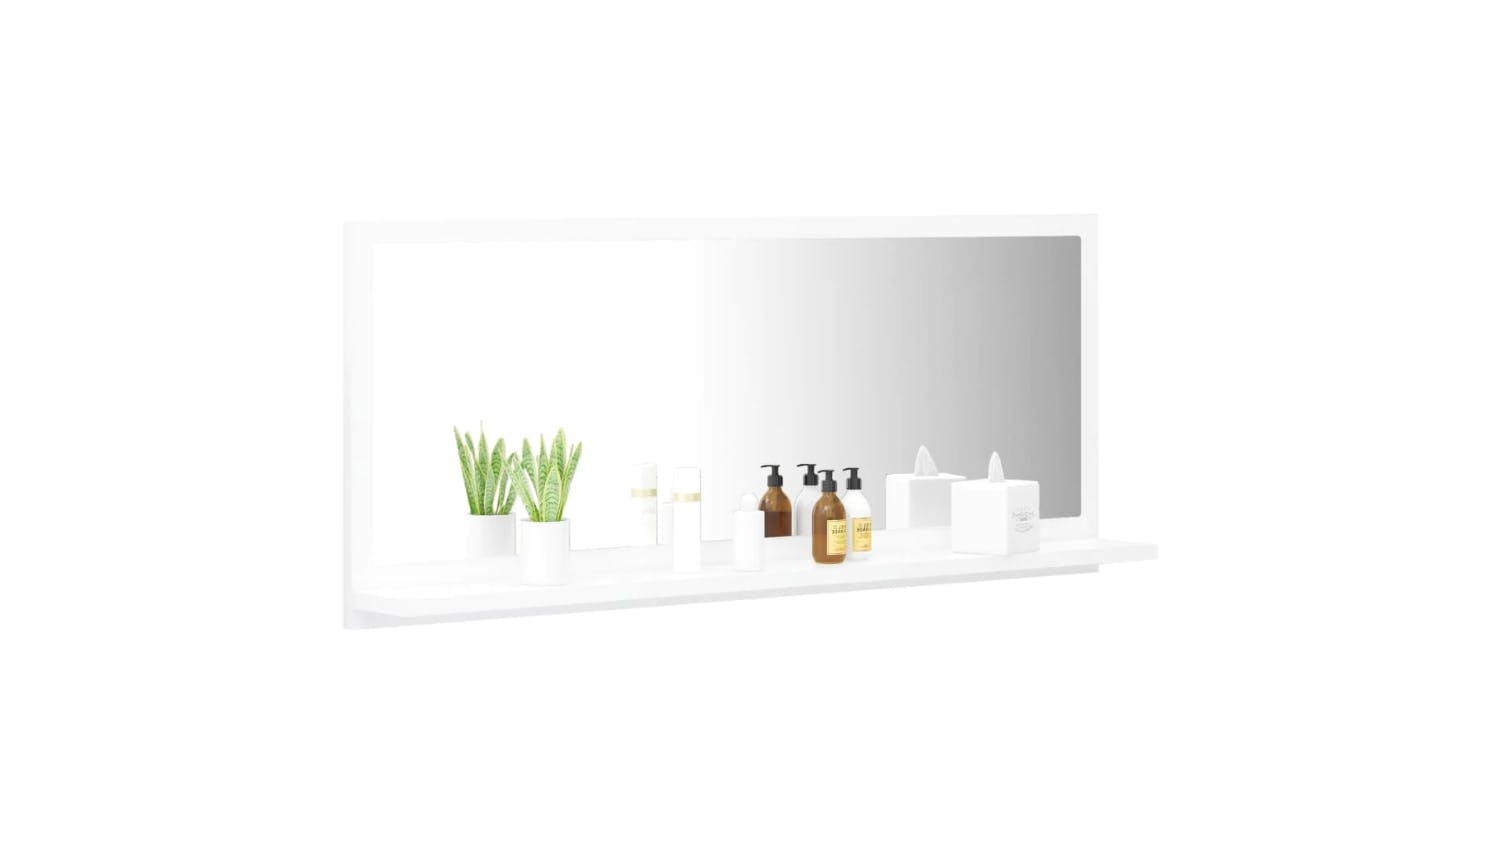 NNEVL Bathroom Mirror w/ Built-In Shelf 90 x 10.5 x 37cm - Gloss White